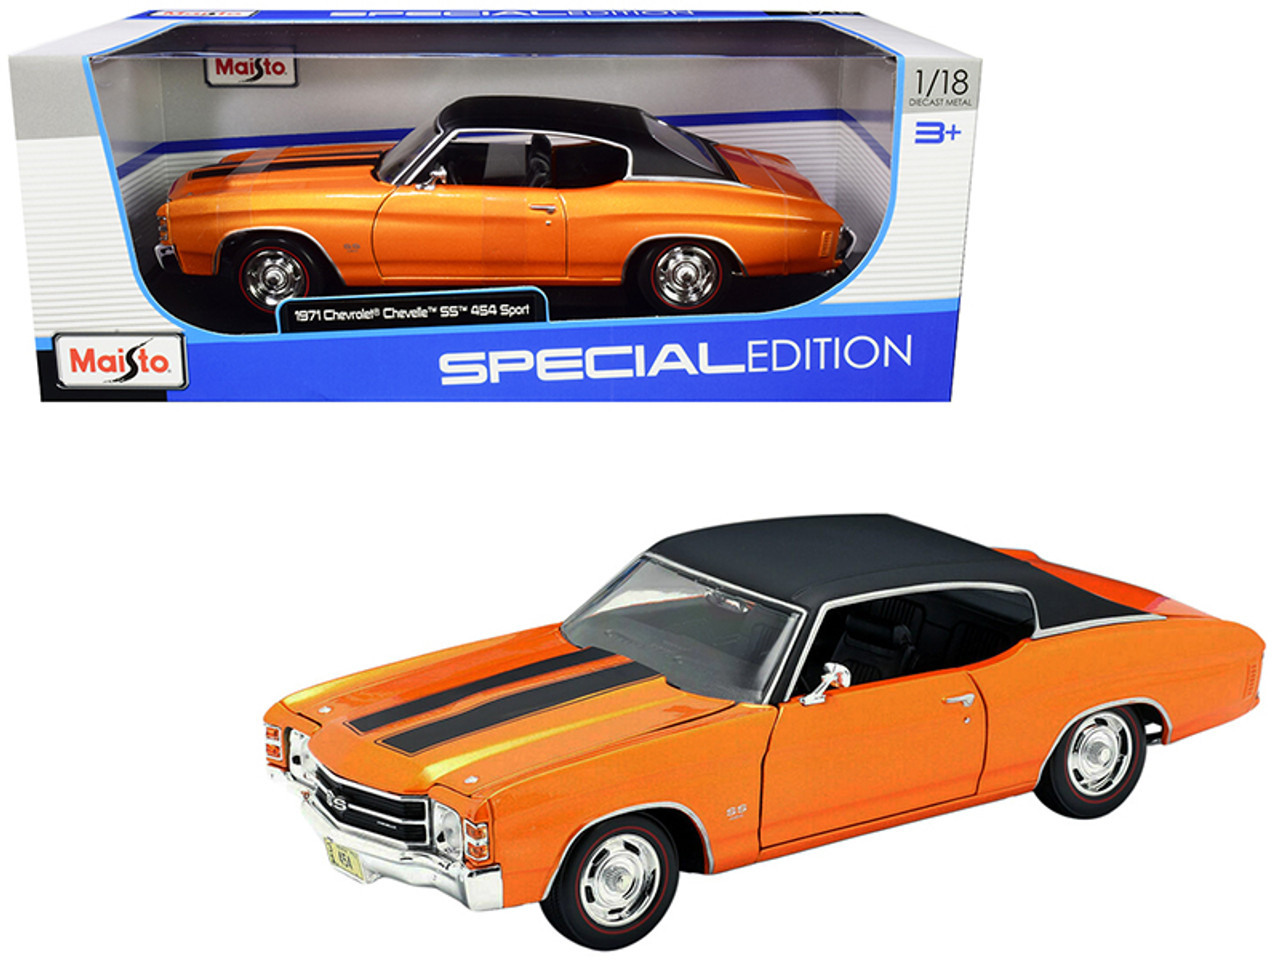 1/18 Maisto 1971 Chevrolet Chevelle SS 454 Sport (Metallic Orange with Black Top and Black Stripes) Diecast Car Model